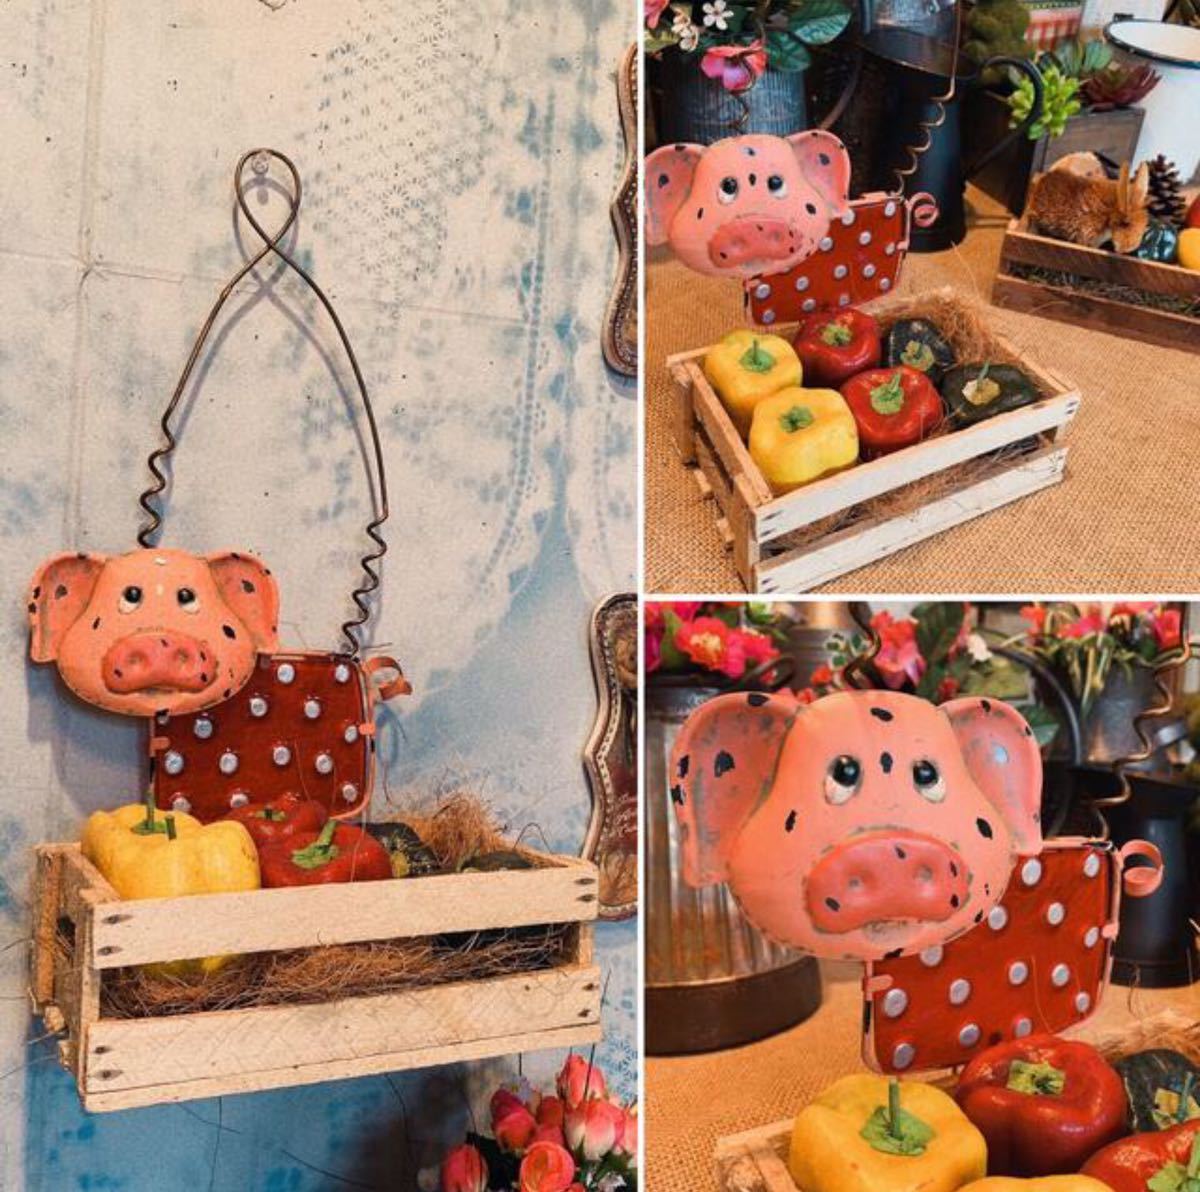 Garden ornaments / Unmanned store display / Vegetable box & paprika / Junk garden / Balcony garden / #Pig, Handmade items, interior, miscellaneous goods, others